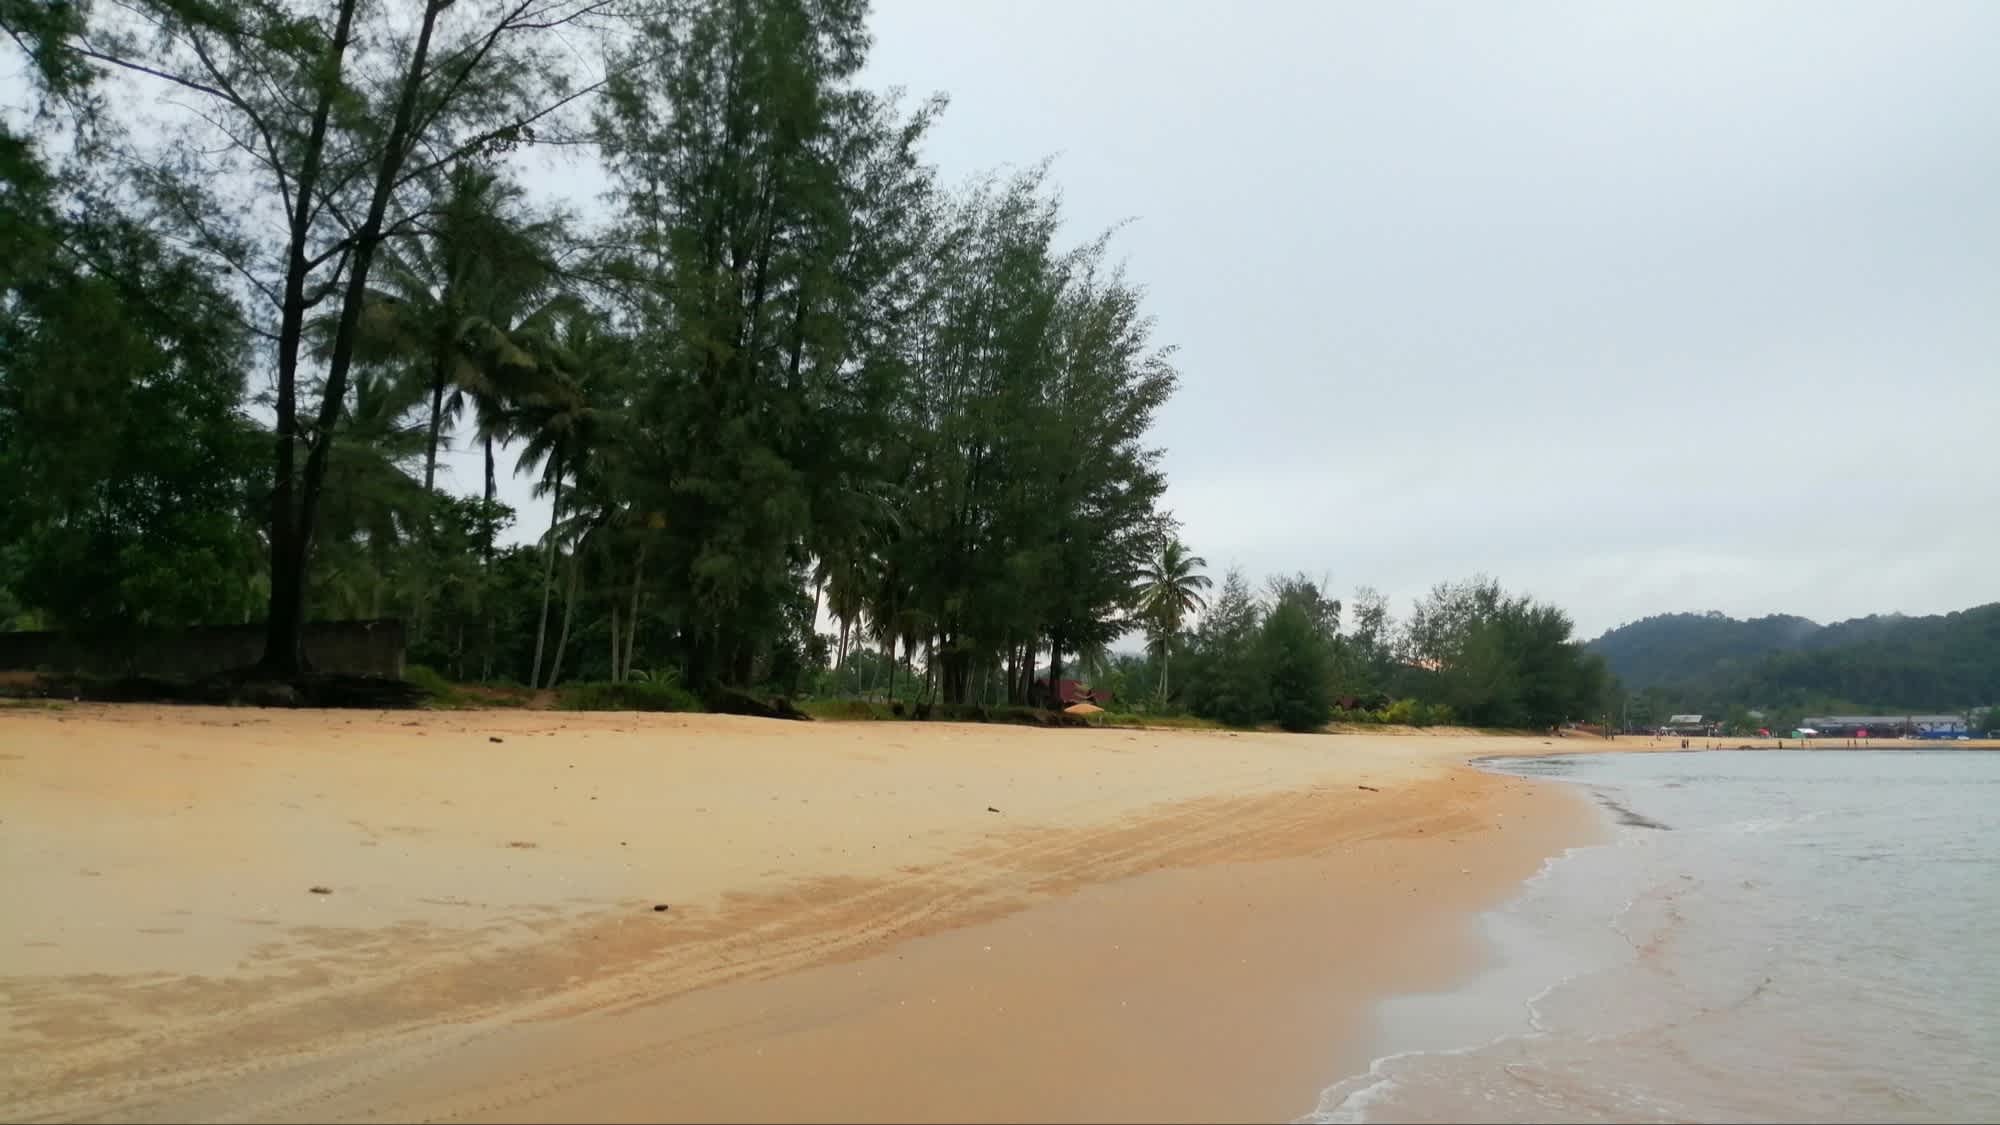 Langer Sandstrand des Cherating Beach, Pahang, Malaysia bei bewölktem Himmel.